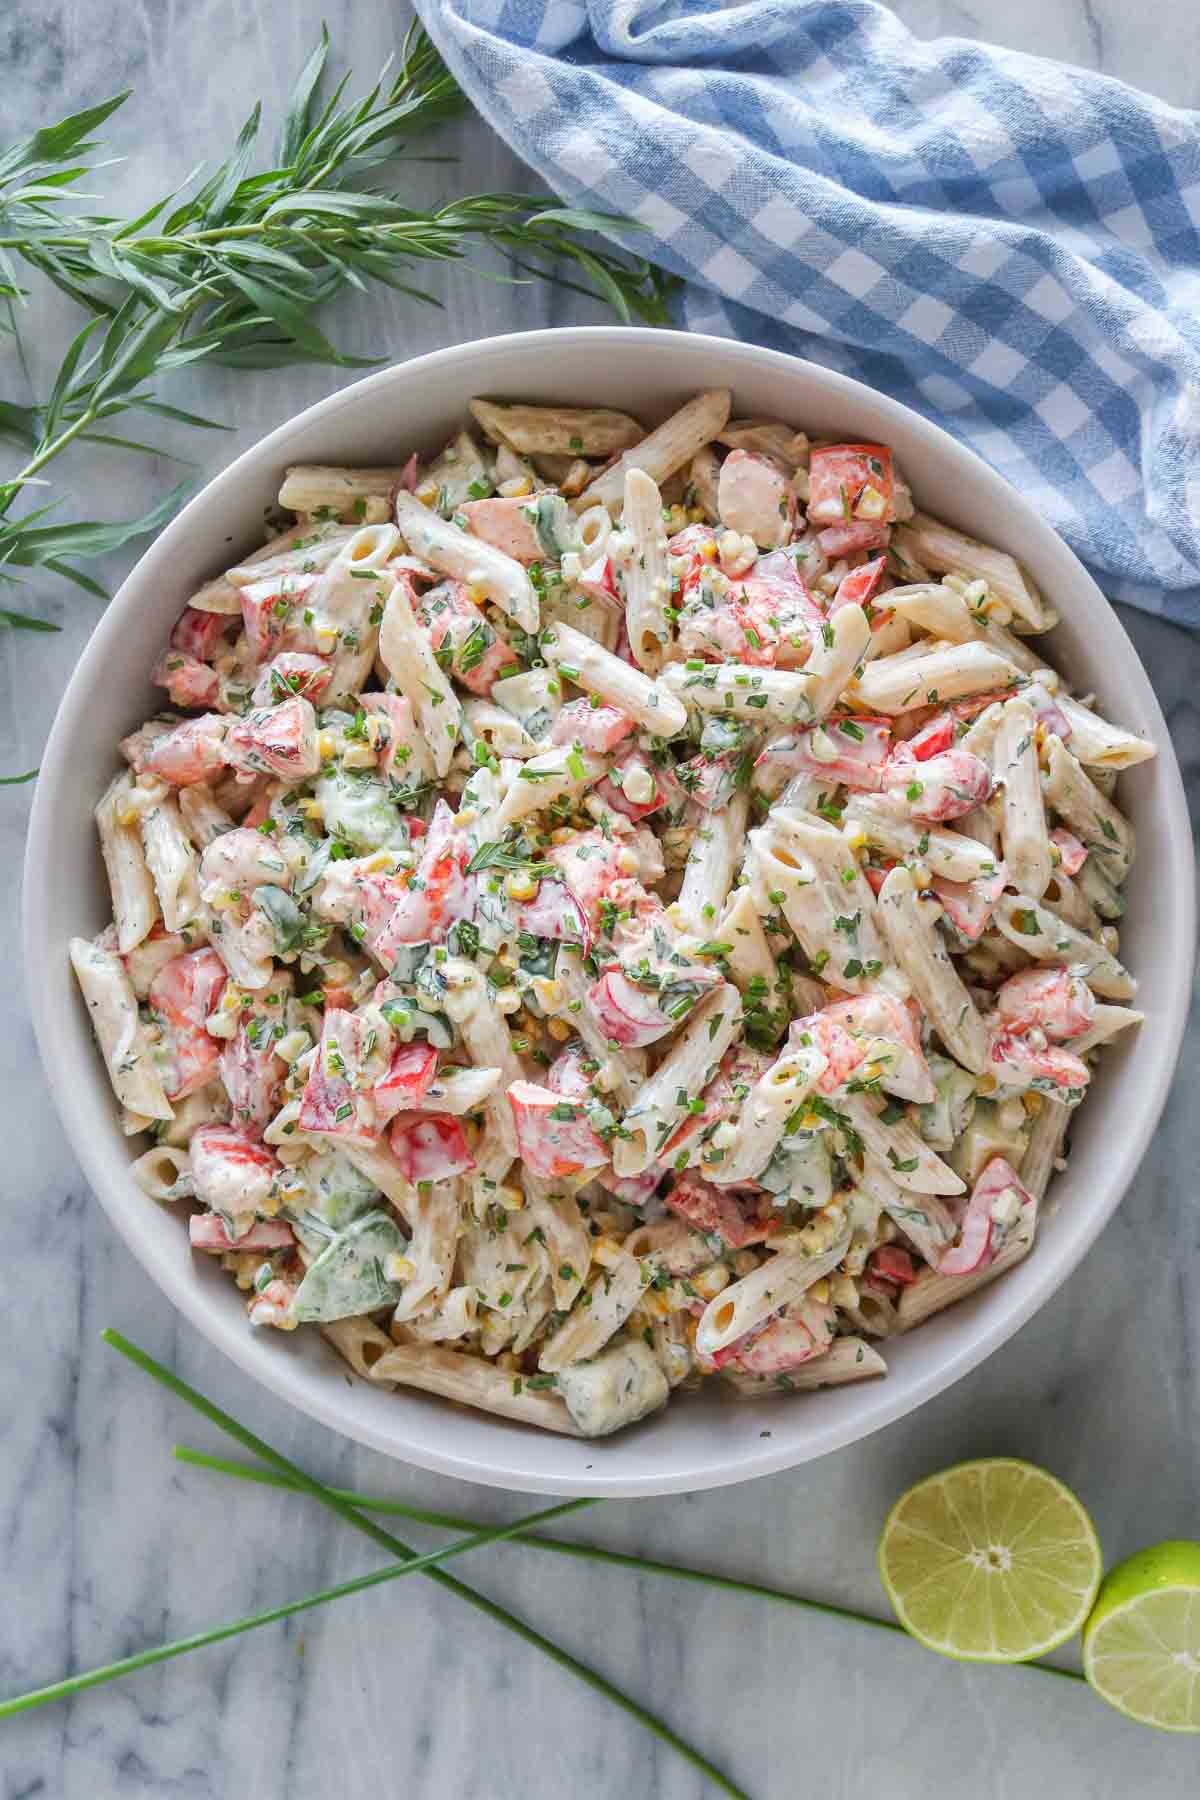 Lobster pasta salad in a serving bowl.